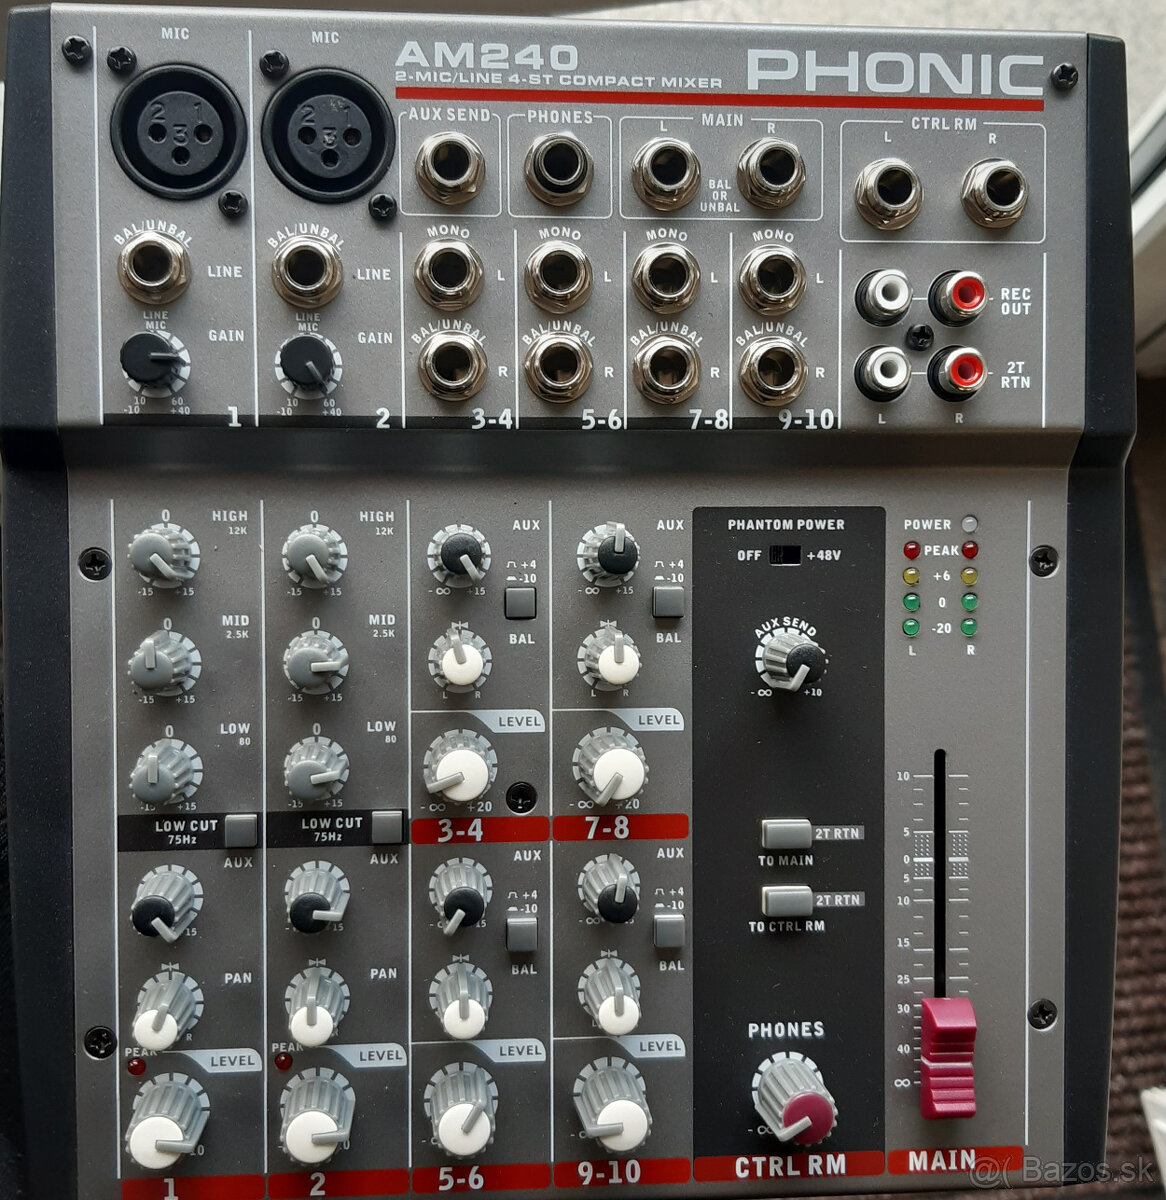 Phonic AM 240 mix